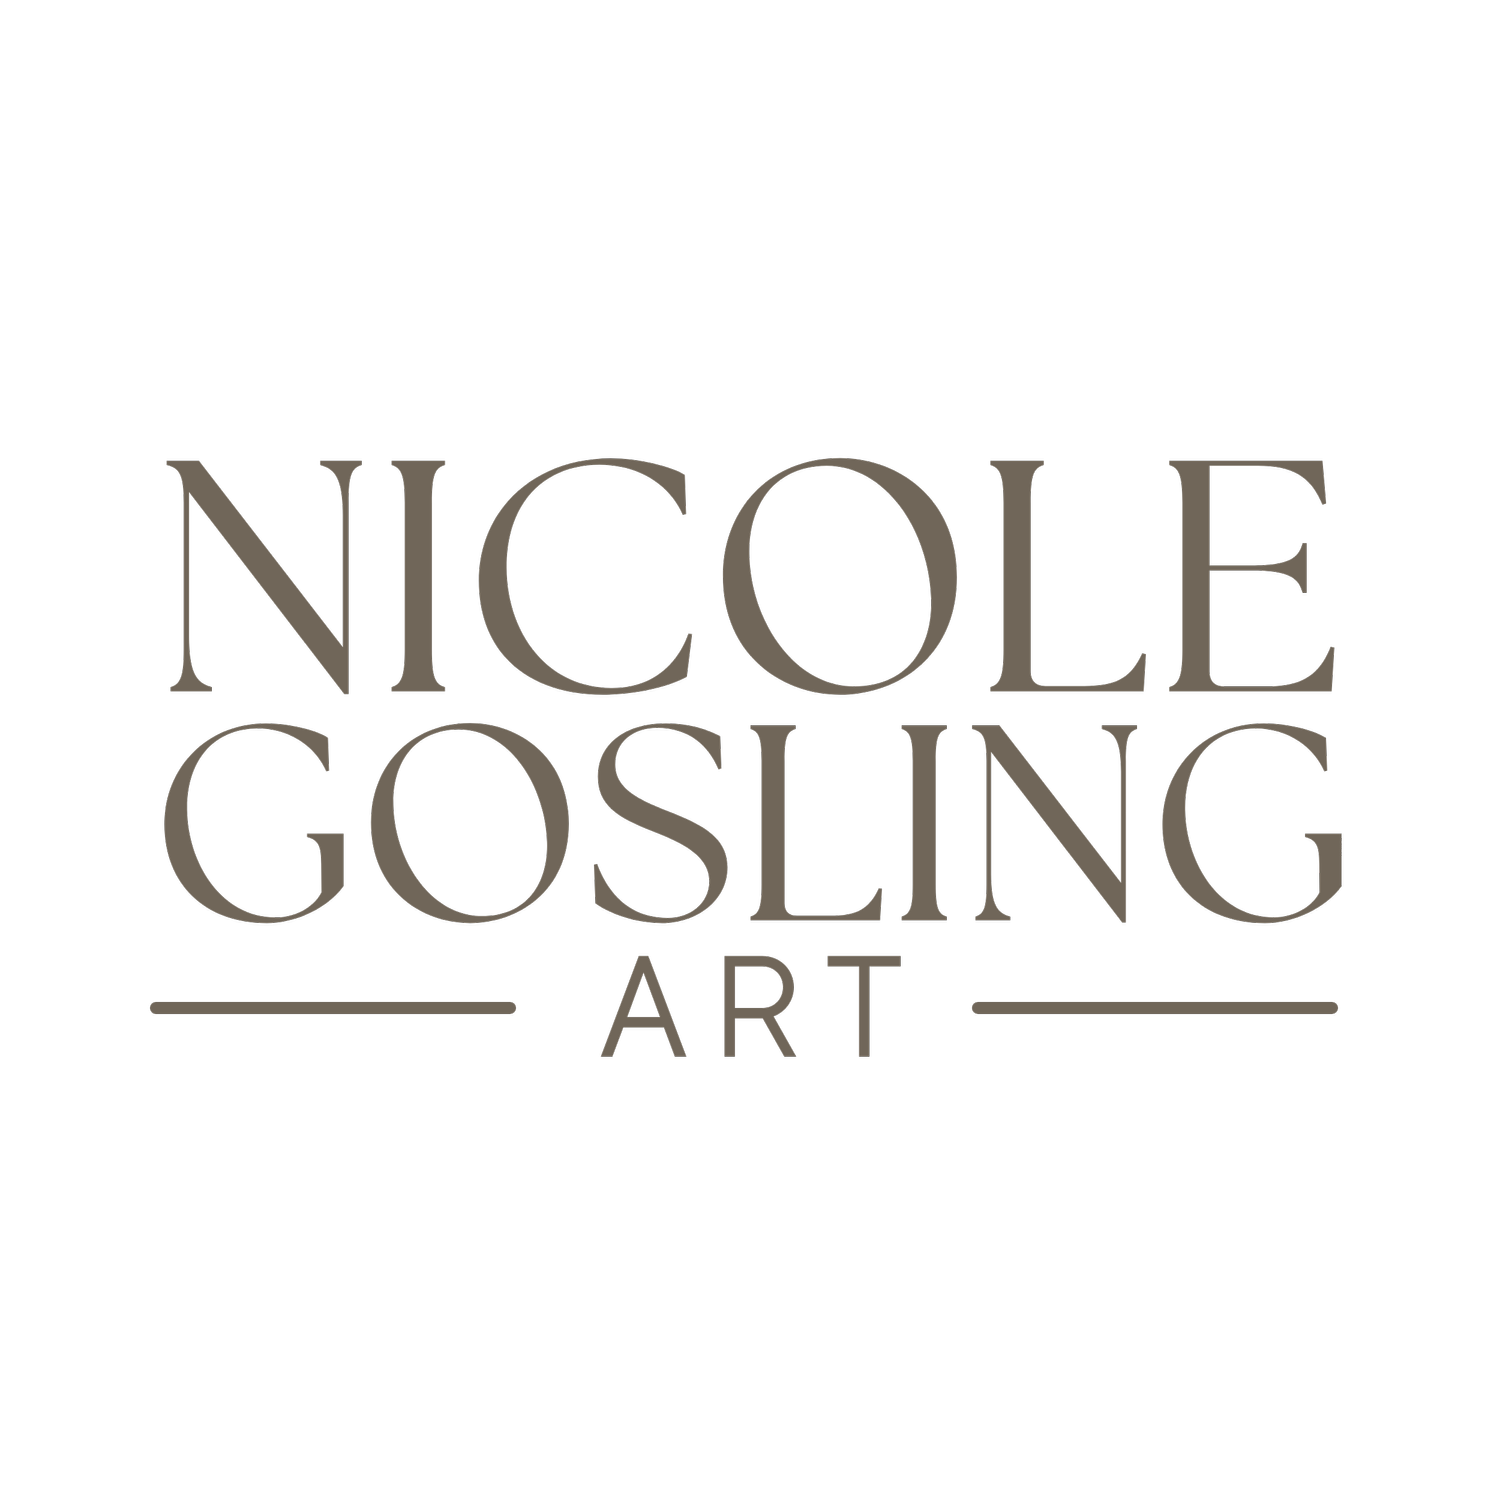                  Nicole Gosling Art